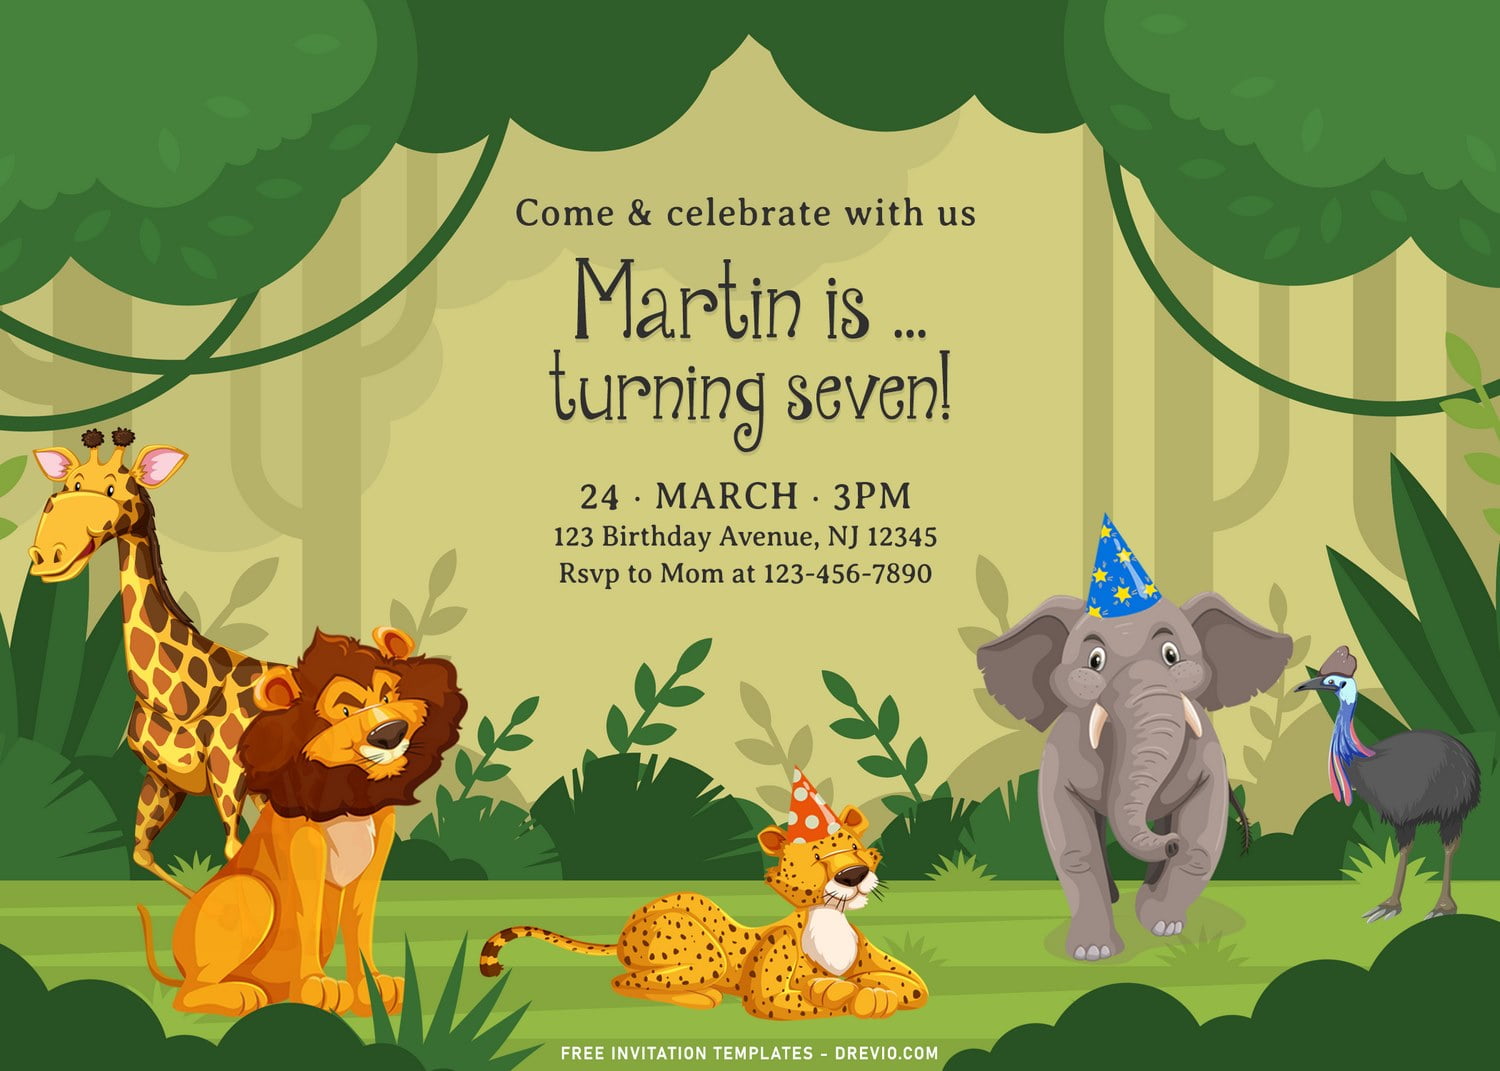 10+ Cute Safari Baby Animals Birthday Invitation Templates For Your Little  Explorer | Download Hundreds FREE PRINTABLE Birthday Invitation Templates